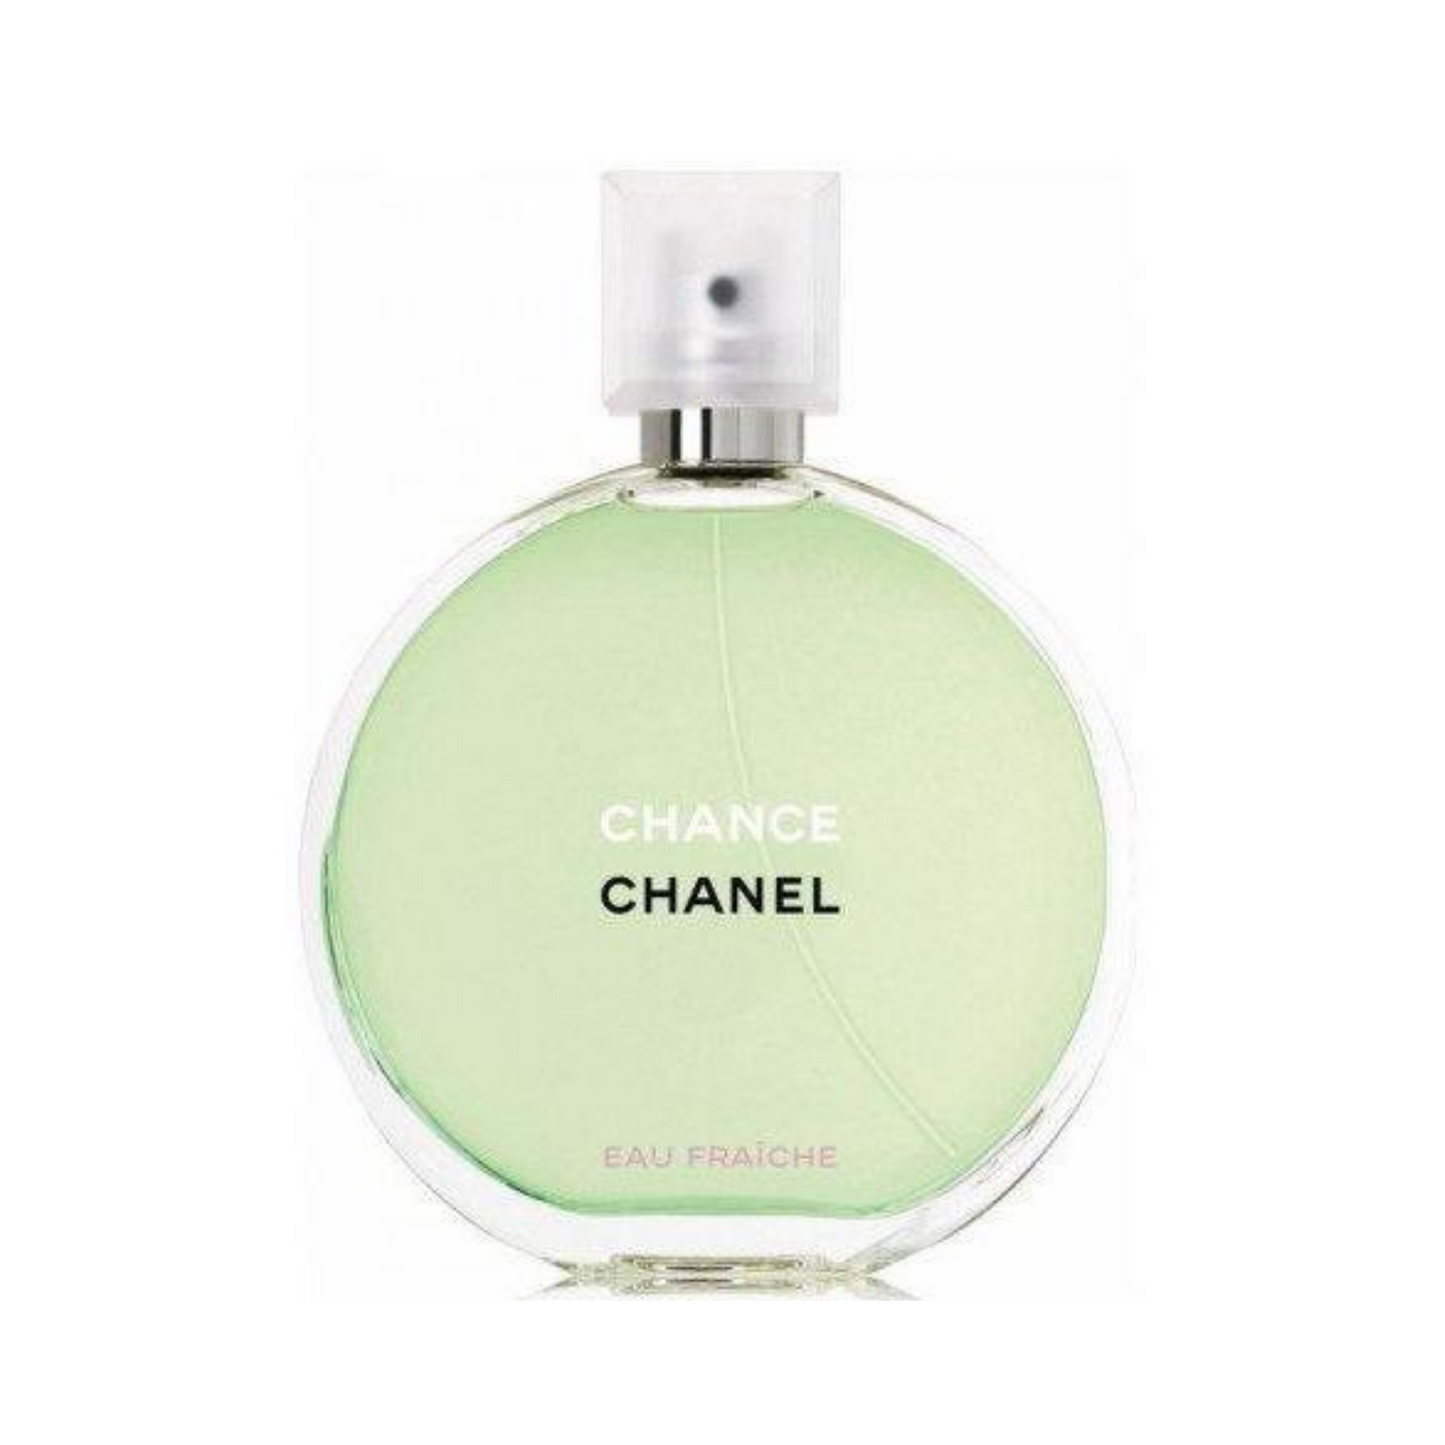 Chance Eau Fraiche by Chanel type Perfume for Women